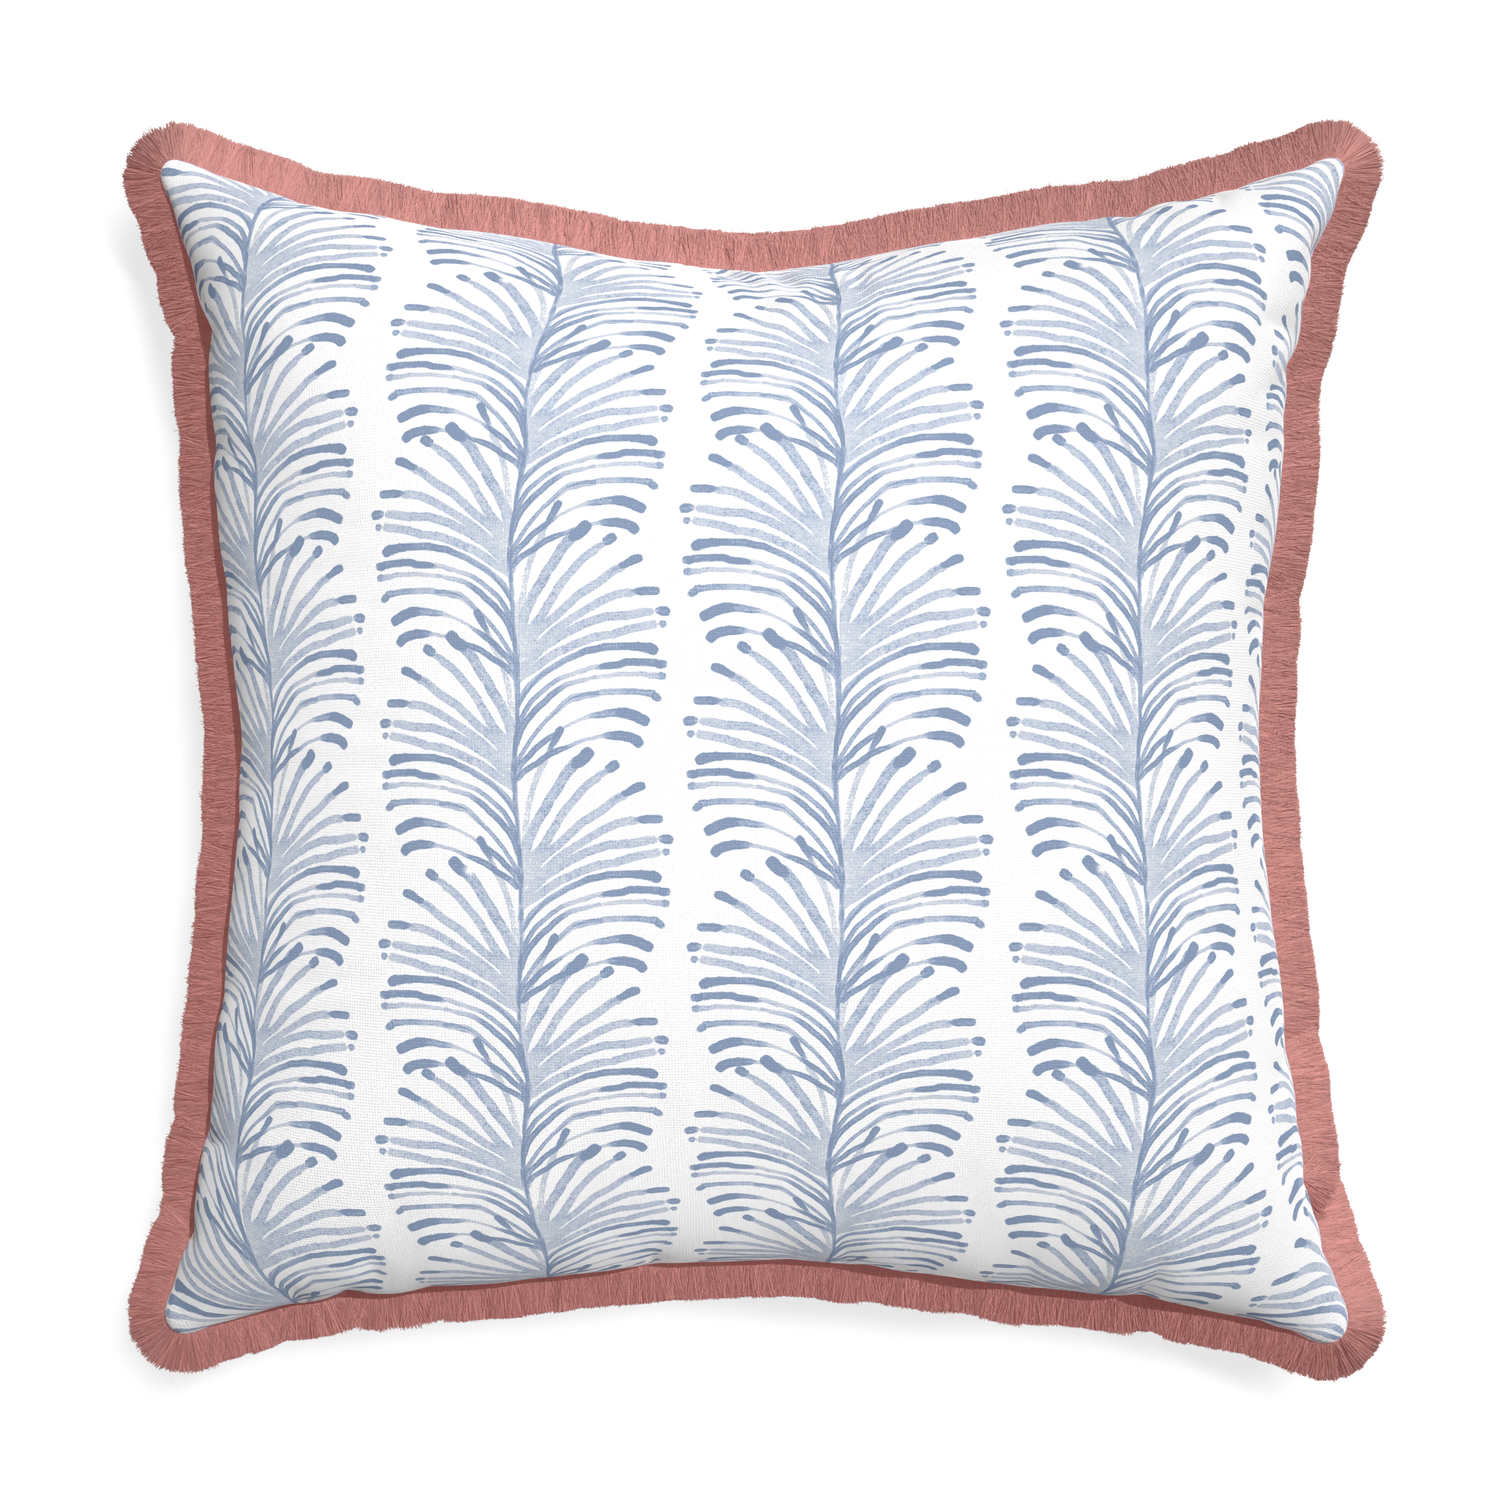 Euro-sham emma sky custom pillow with d fringe on white background